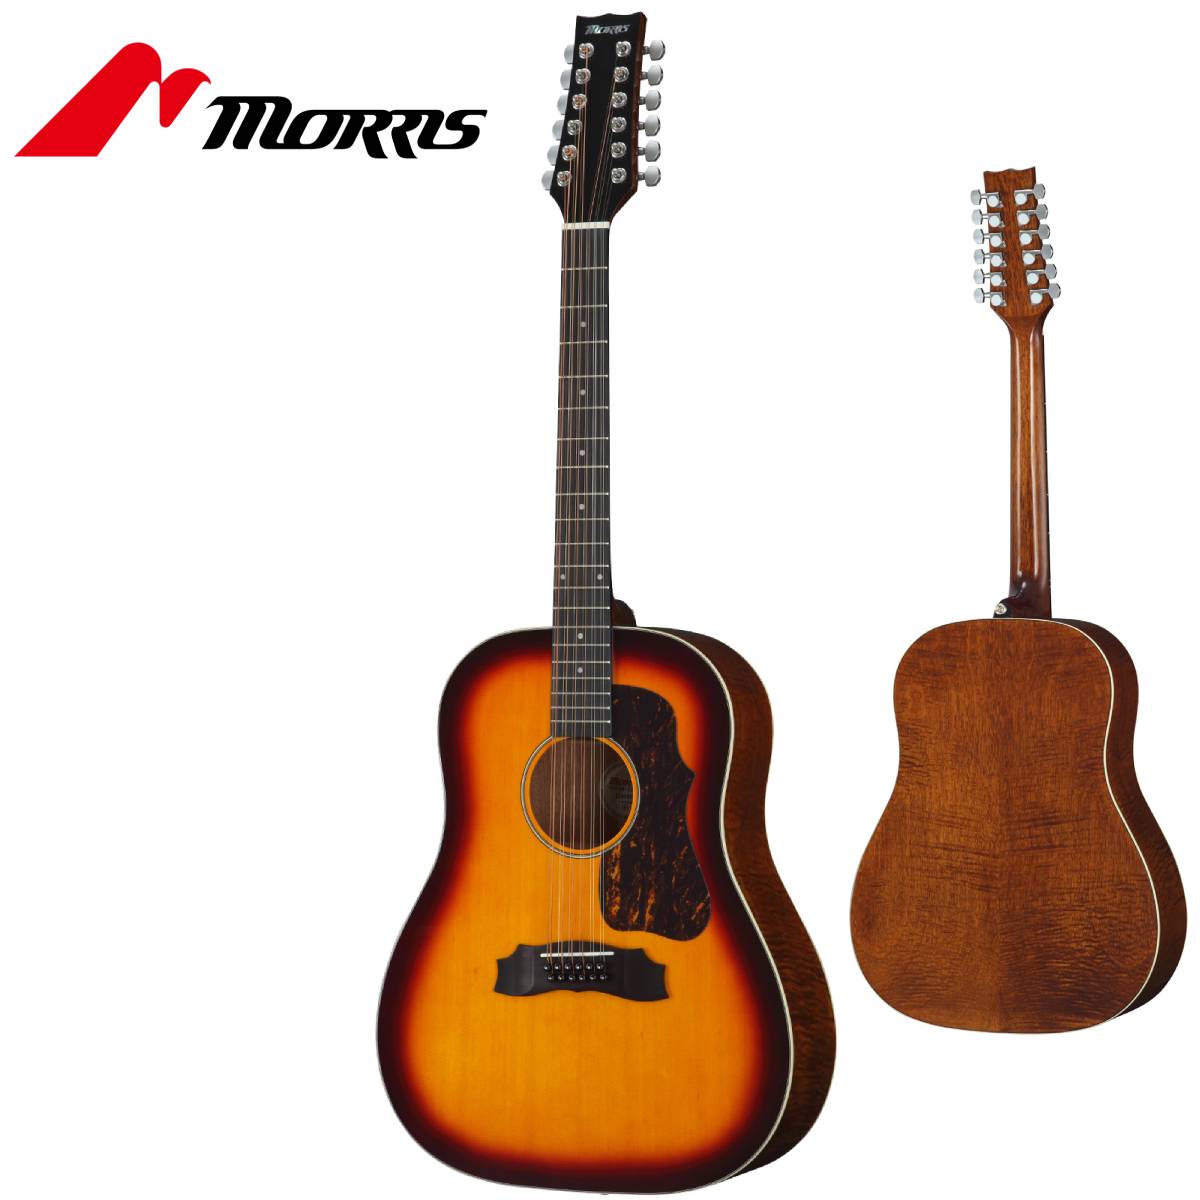 MORRISGB-021 12-Strings Guitar -PERFORMERS EDITION- 《12弦ギター 